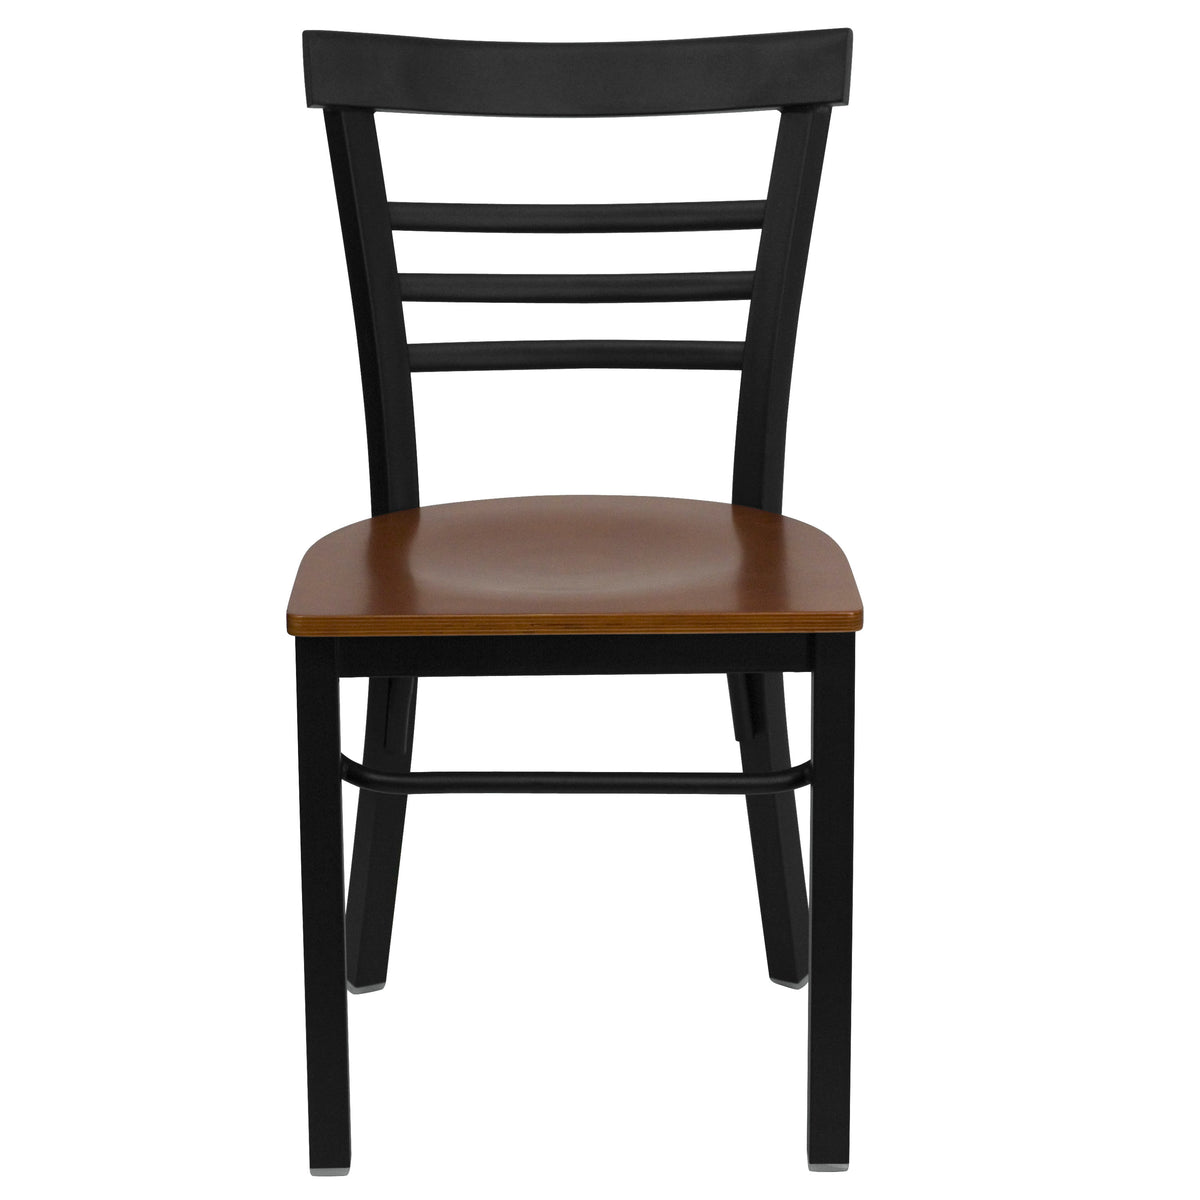 Cherry Wood Seat/Black Metal Frame |#| Black Three-Slat Ladder Back Metal Restaurant Chair - Cherry Wood Seat